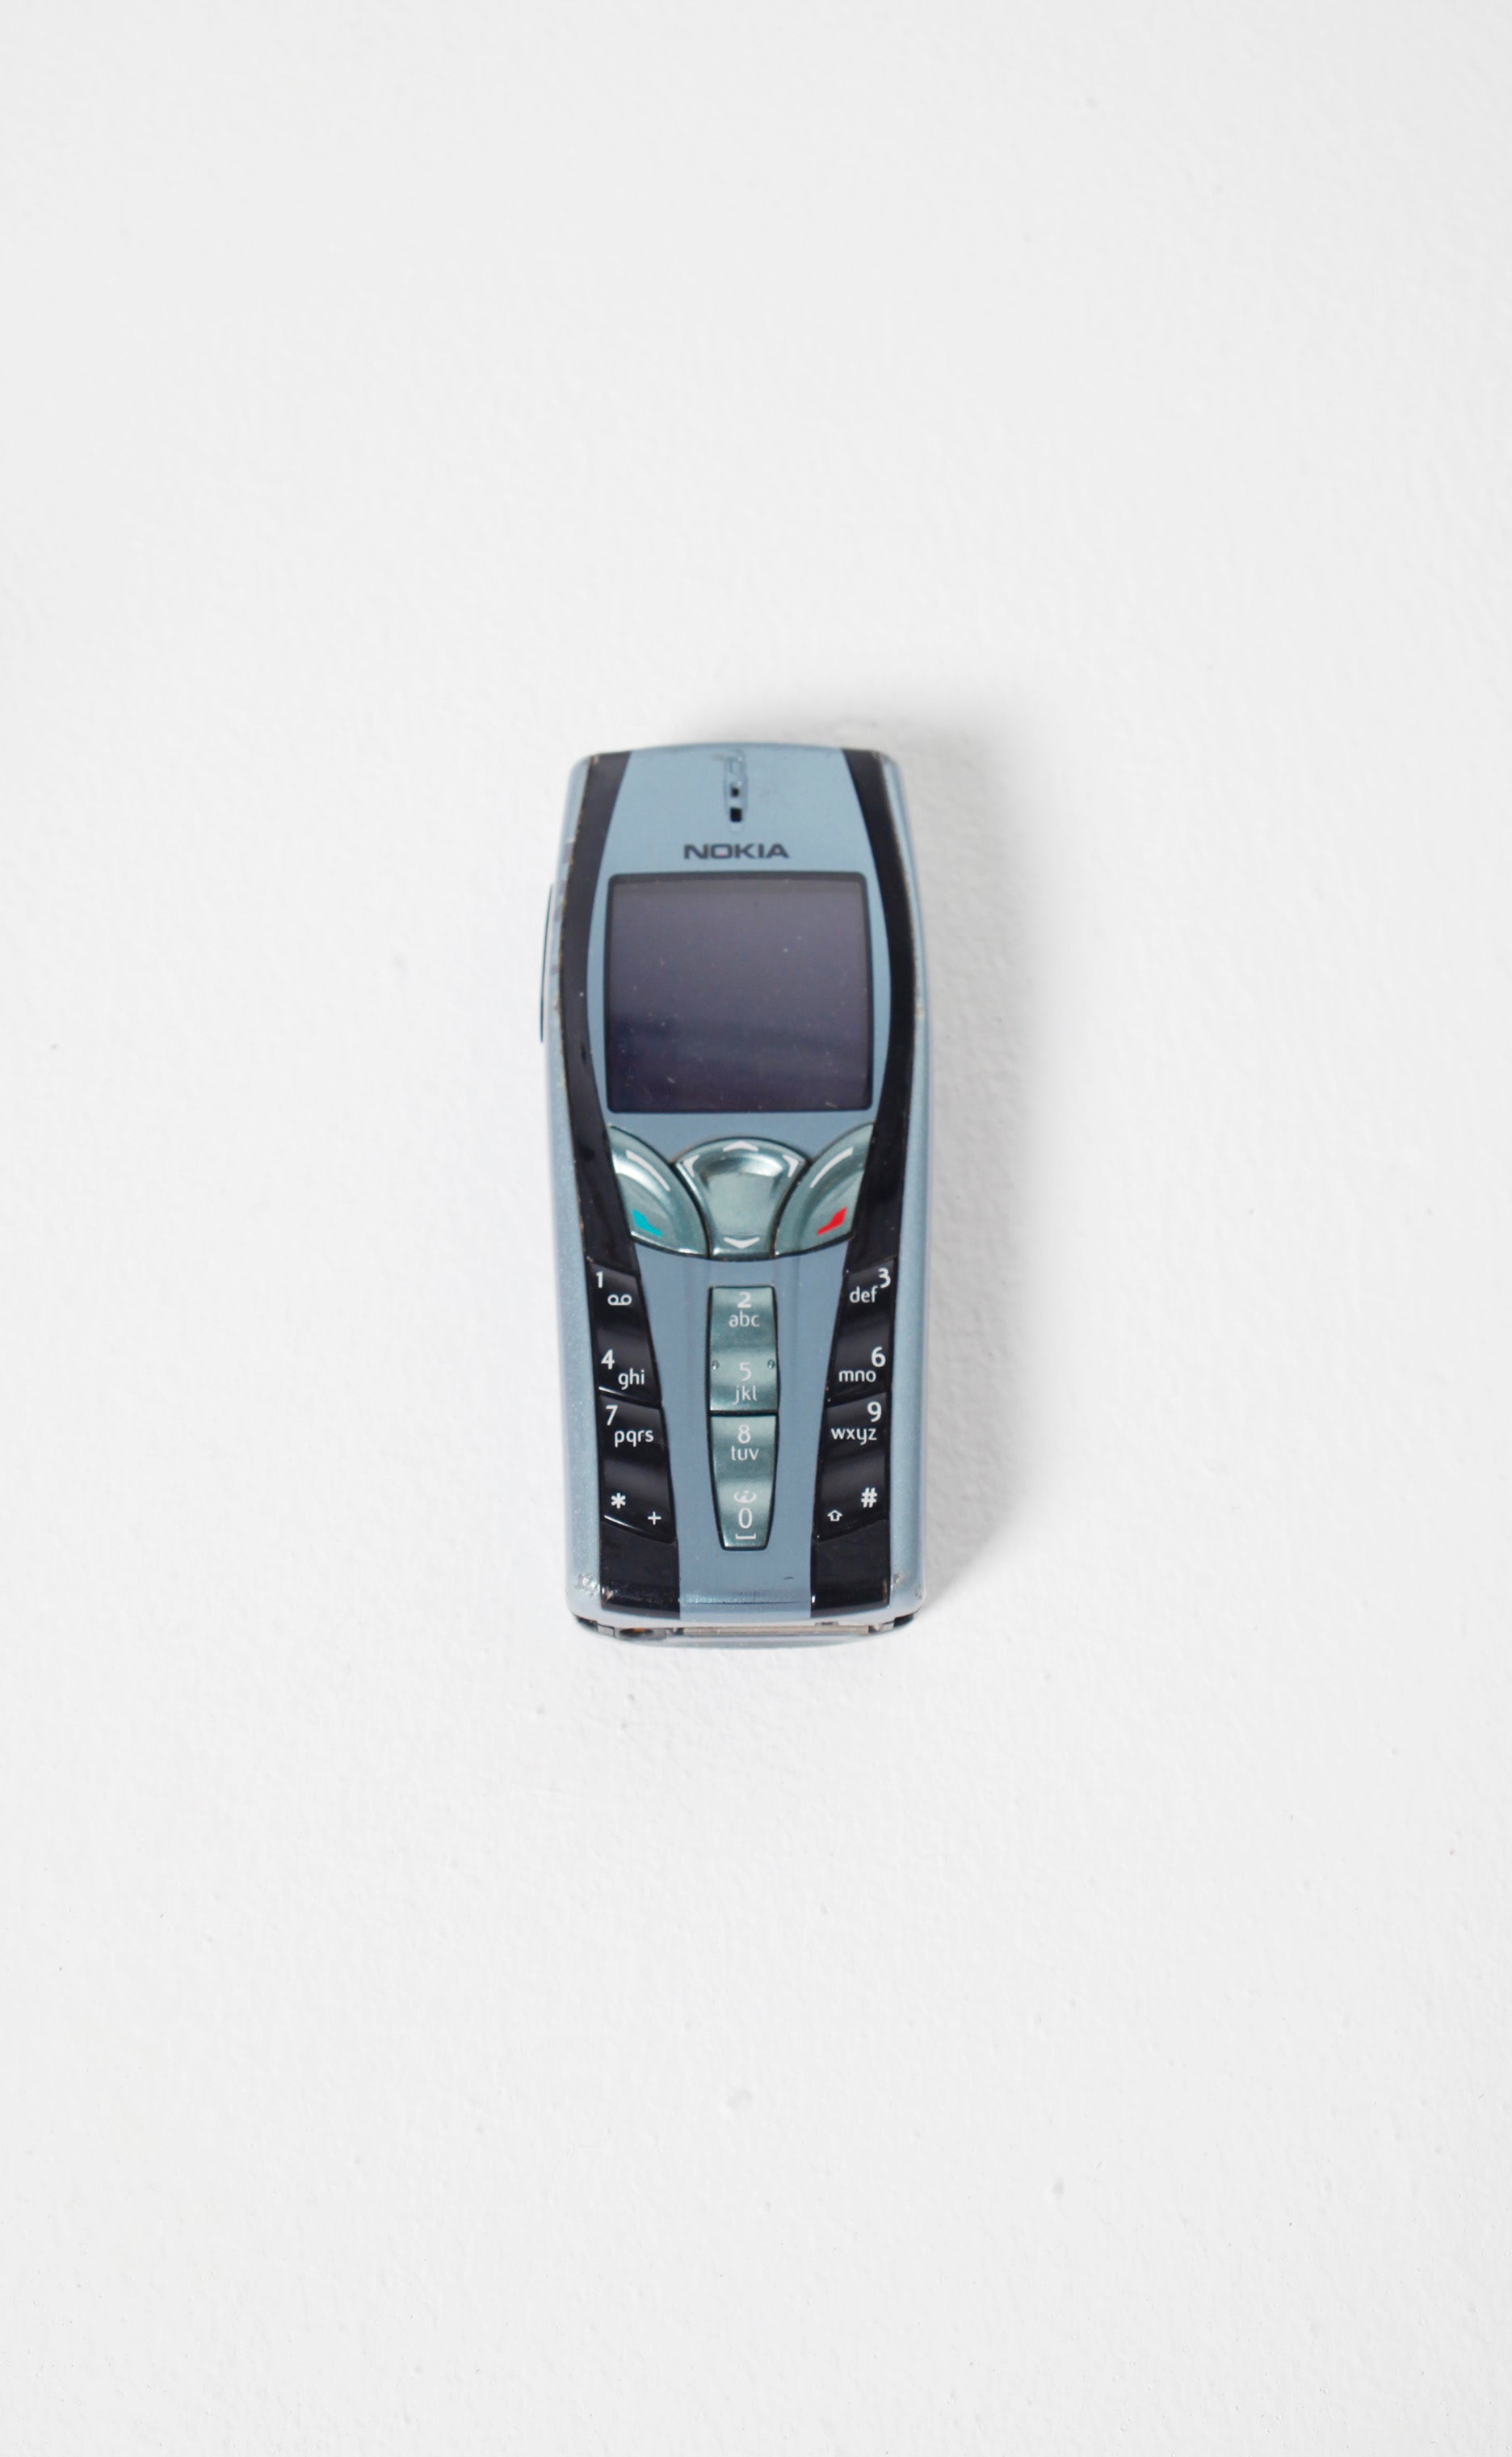 Nokia 7210 Mobile Phone